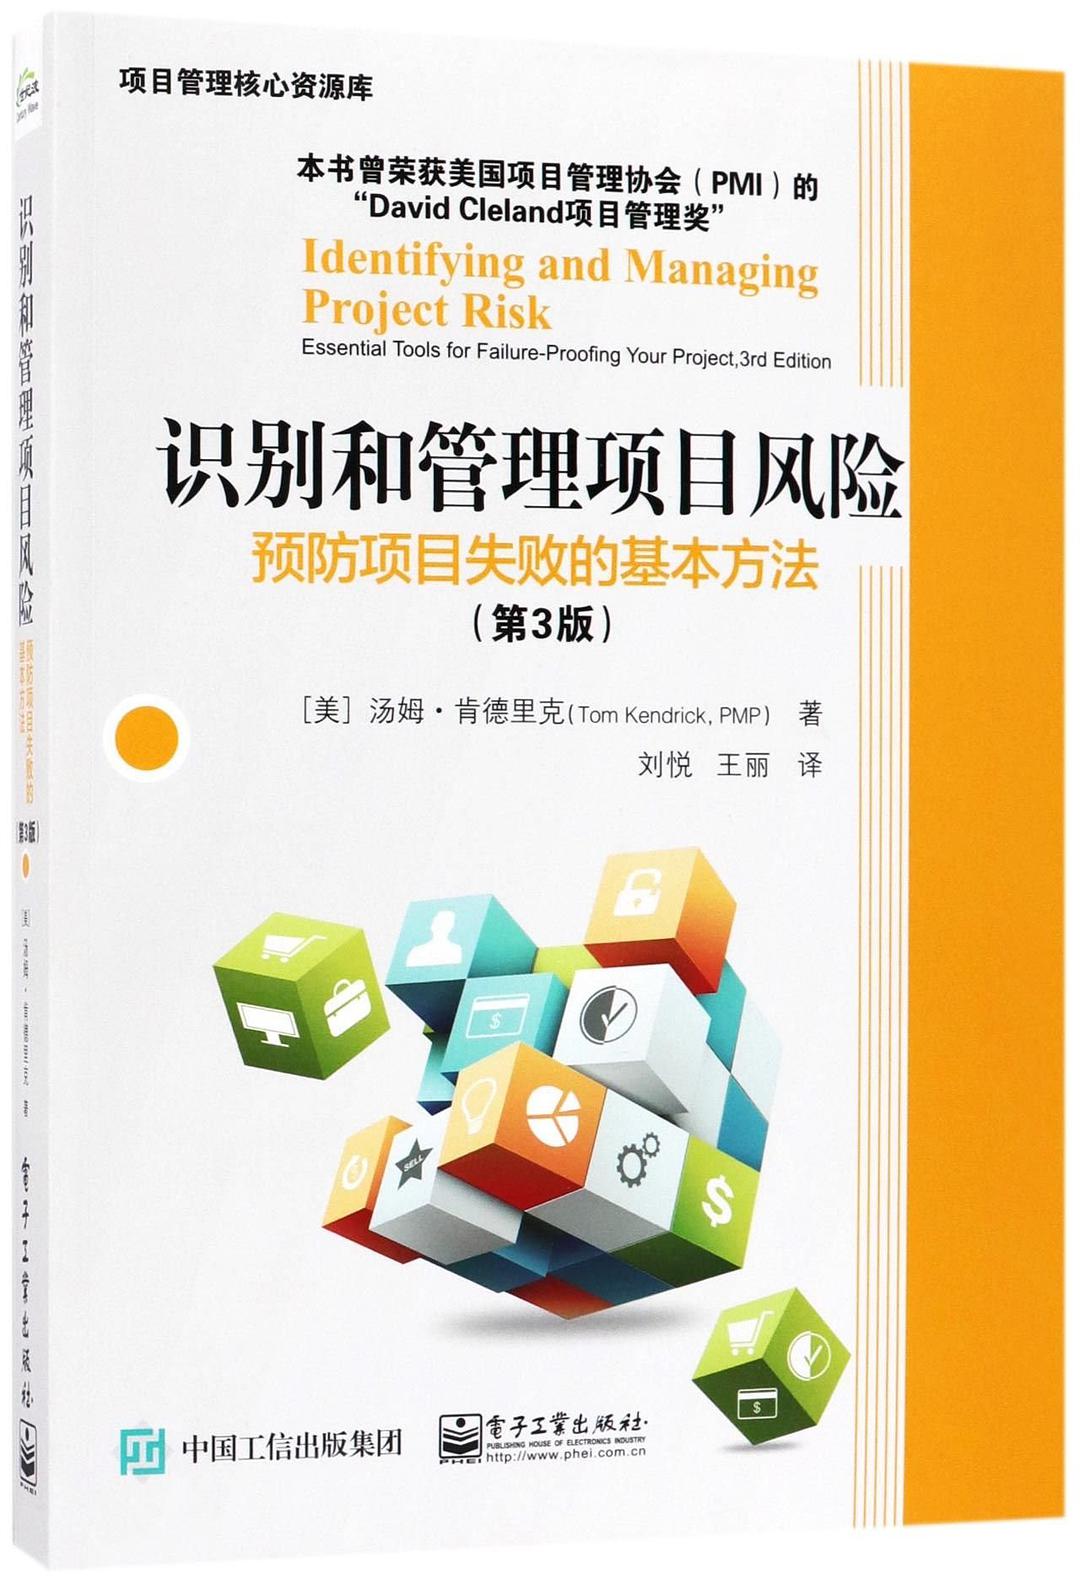 识别和管理项目风险 预防项目失败的基本方法 essential tools for failure-proofing your project